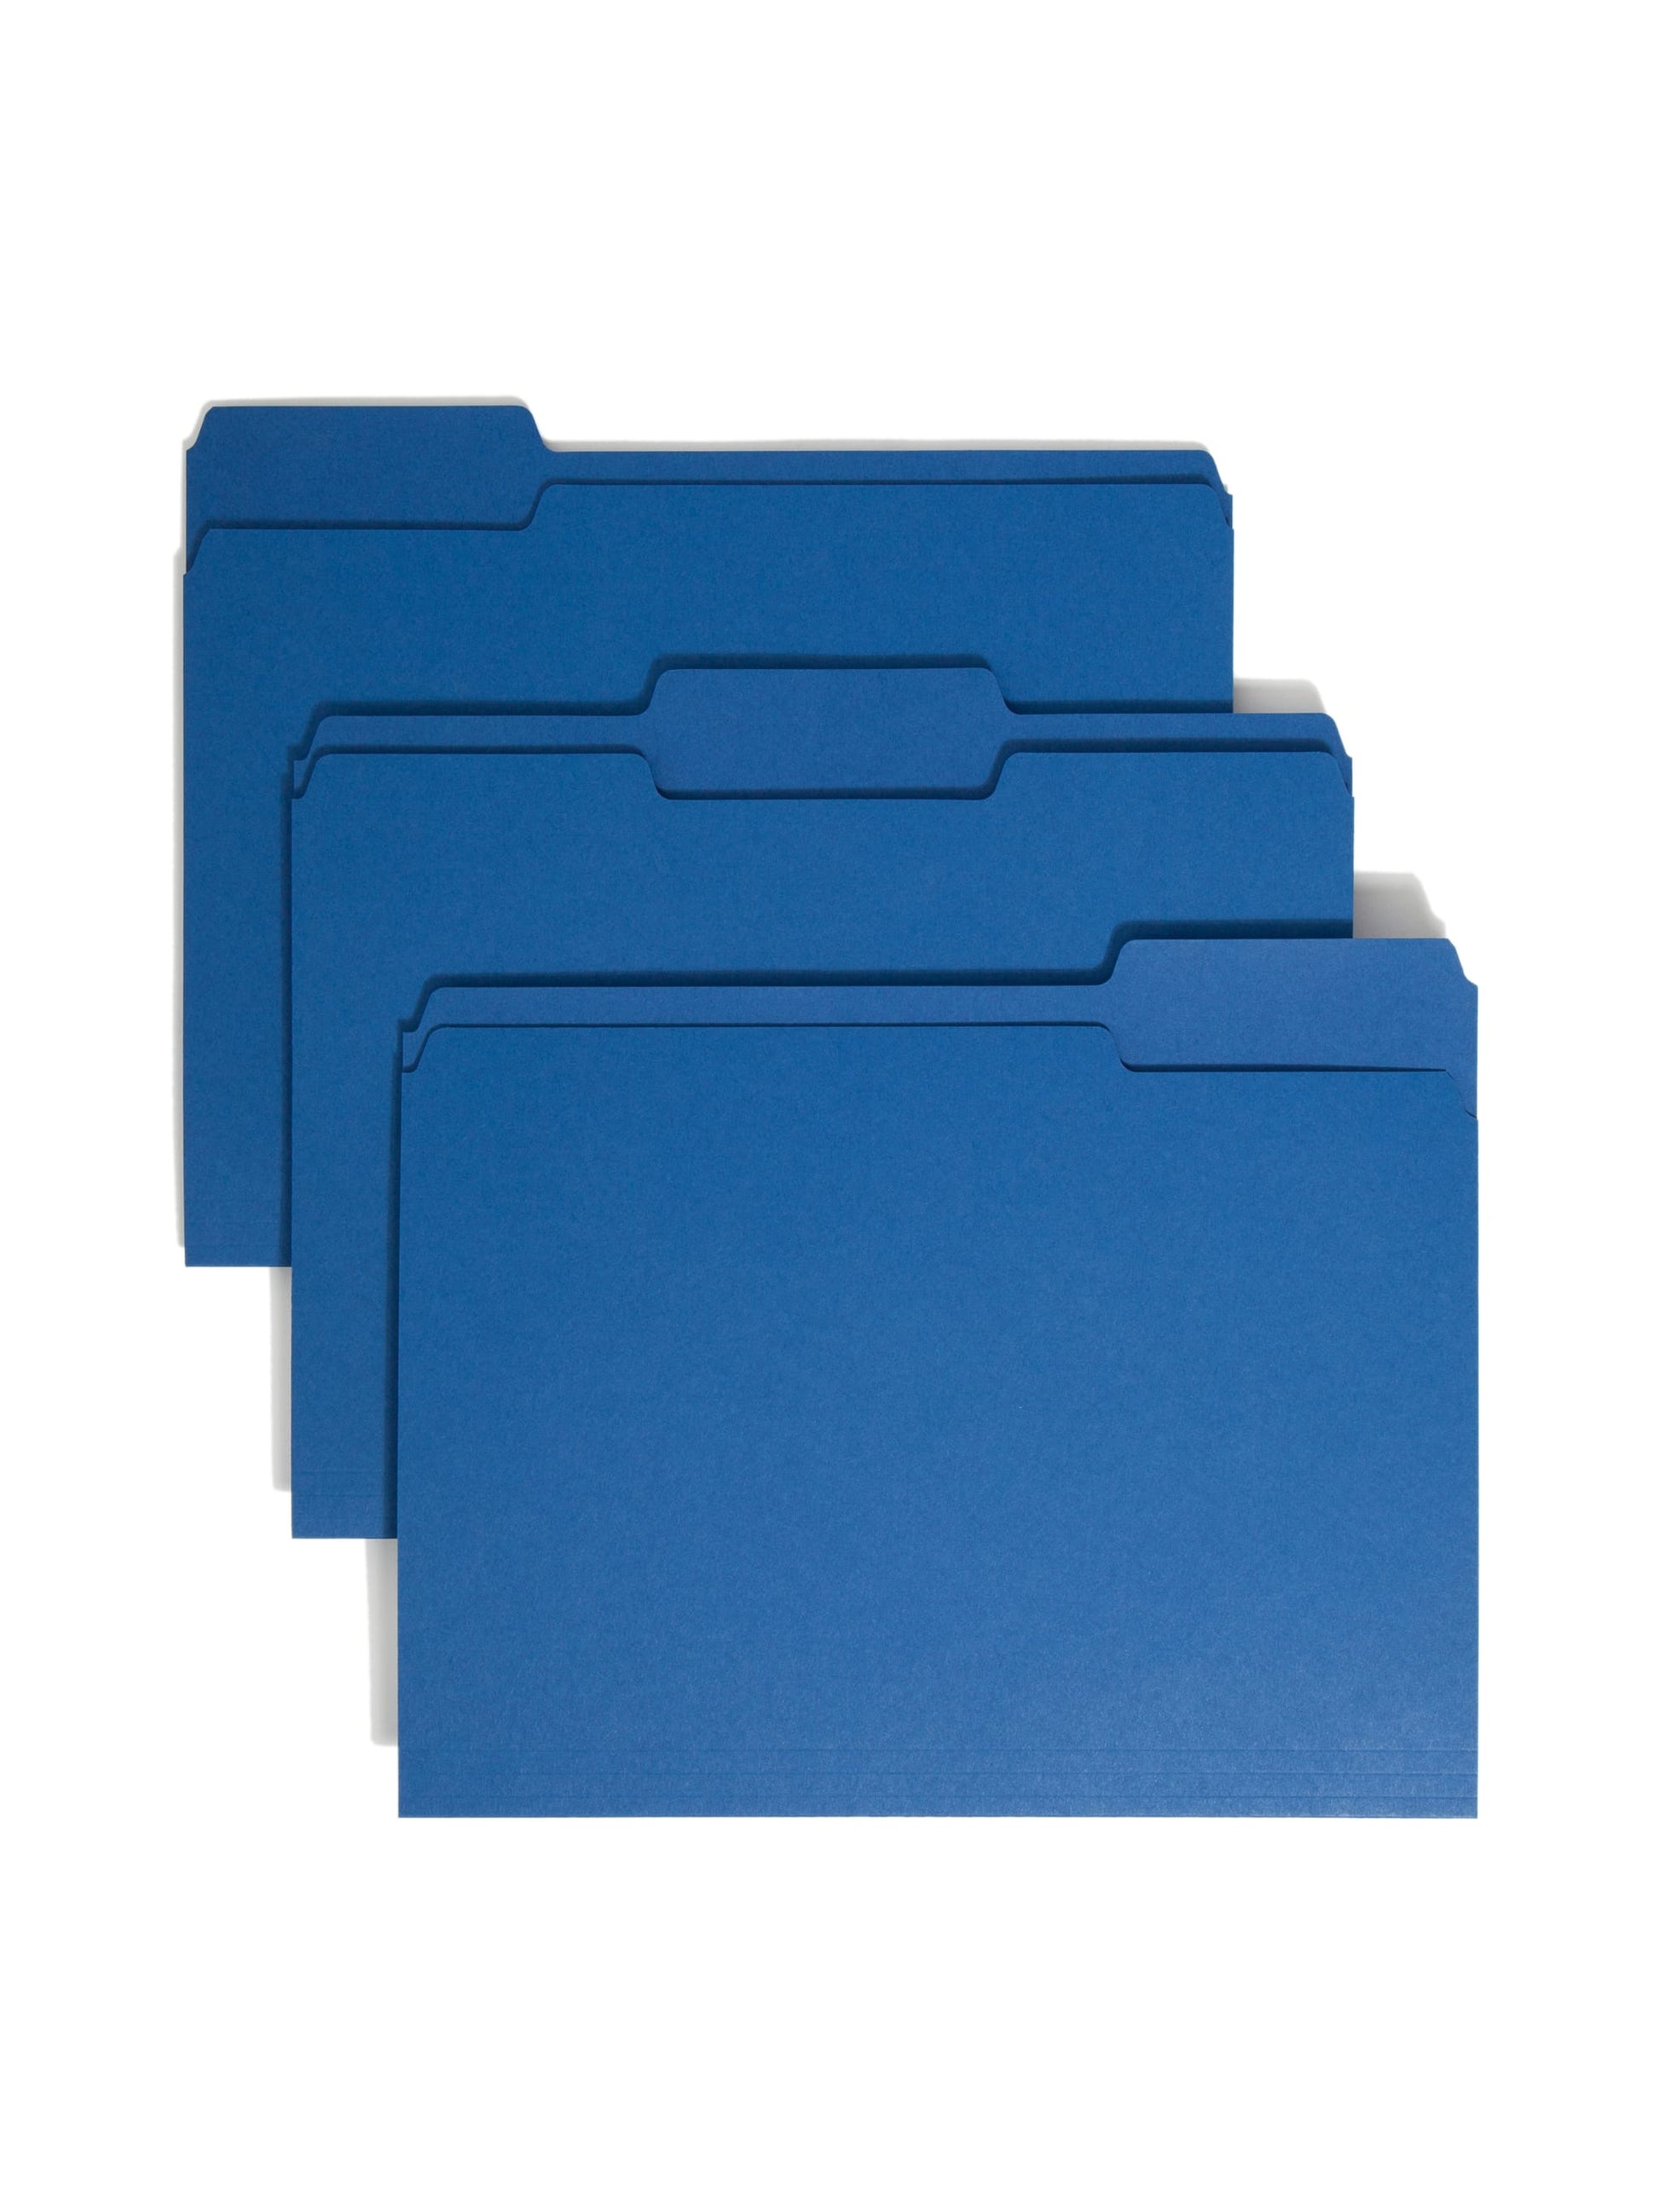 Standard File Folders, 1/3-Cut Tab, Navy Color, Letter Size, Set of 100, 086486131933